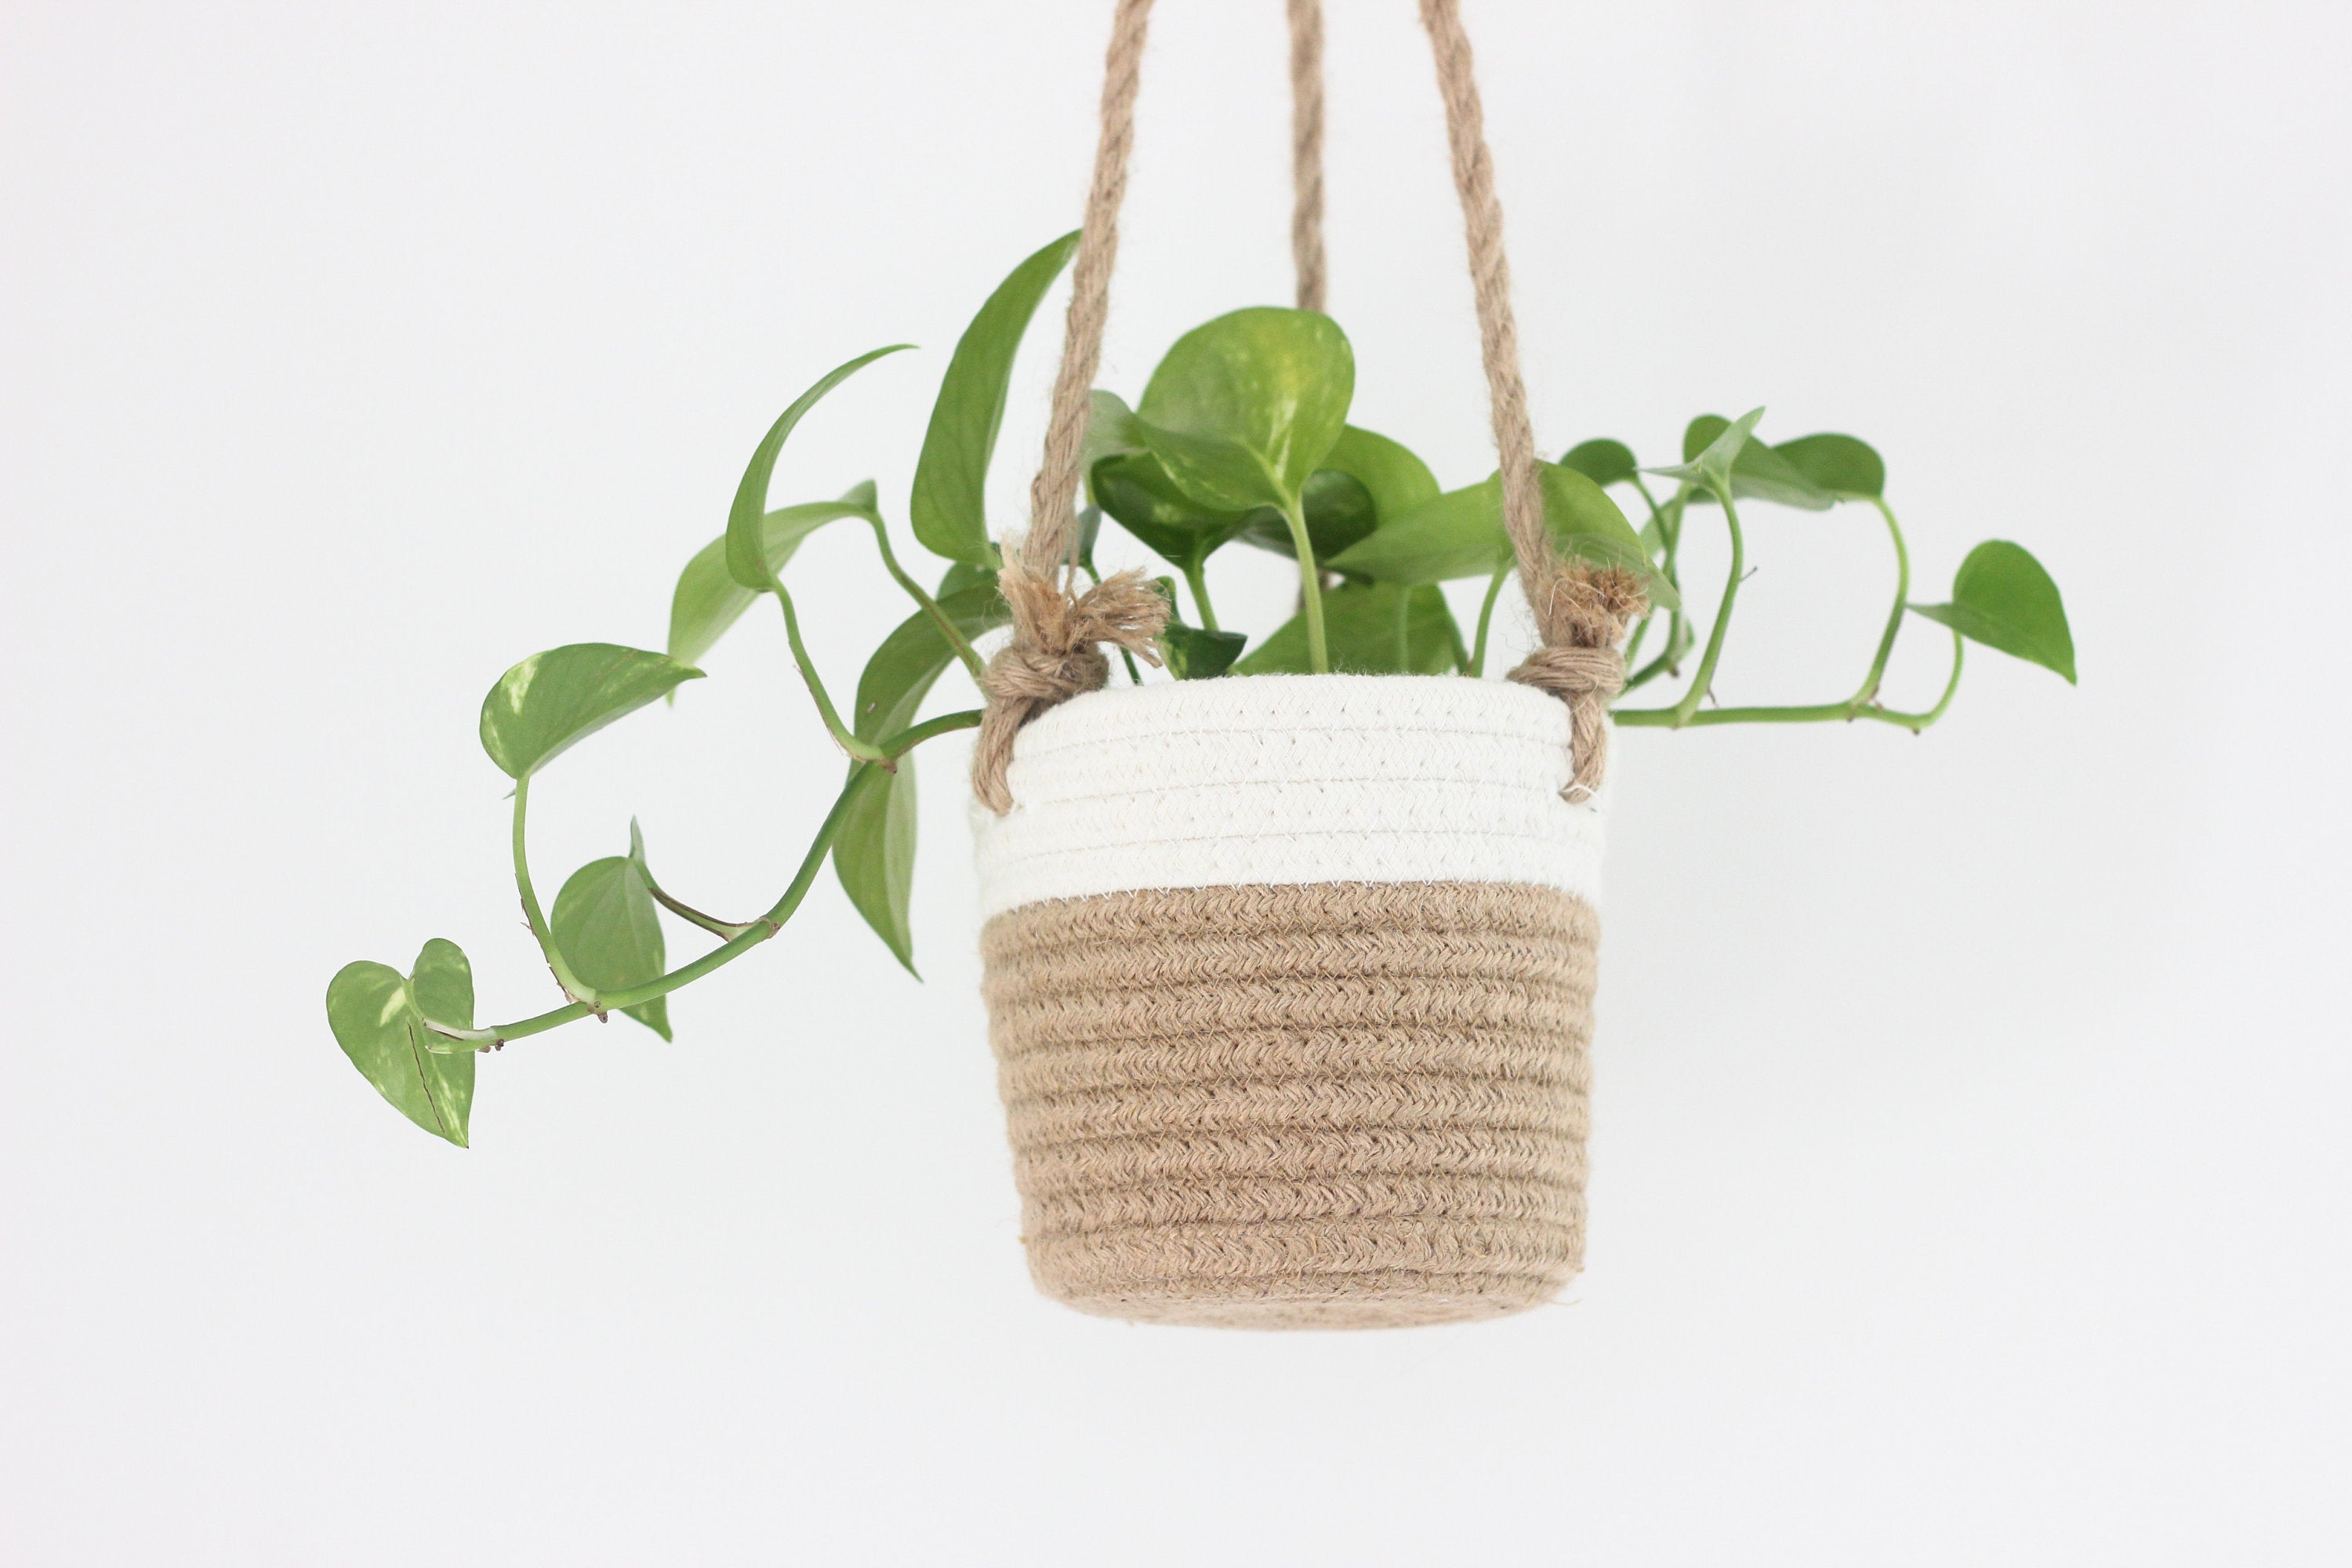 Medium Beige and White Cotton Rope Hanging Planter Basket